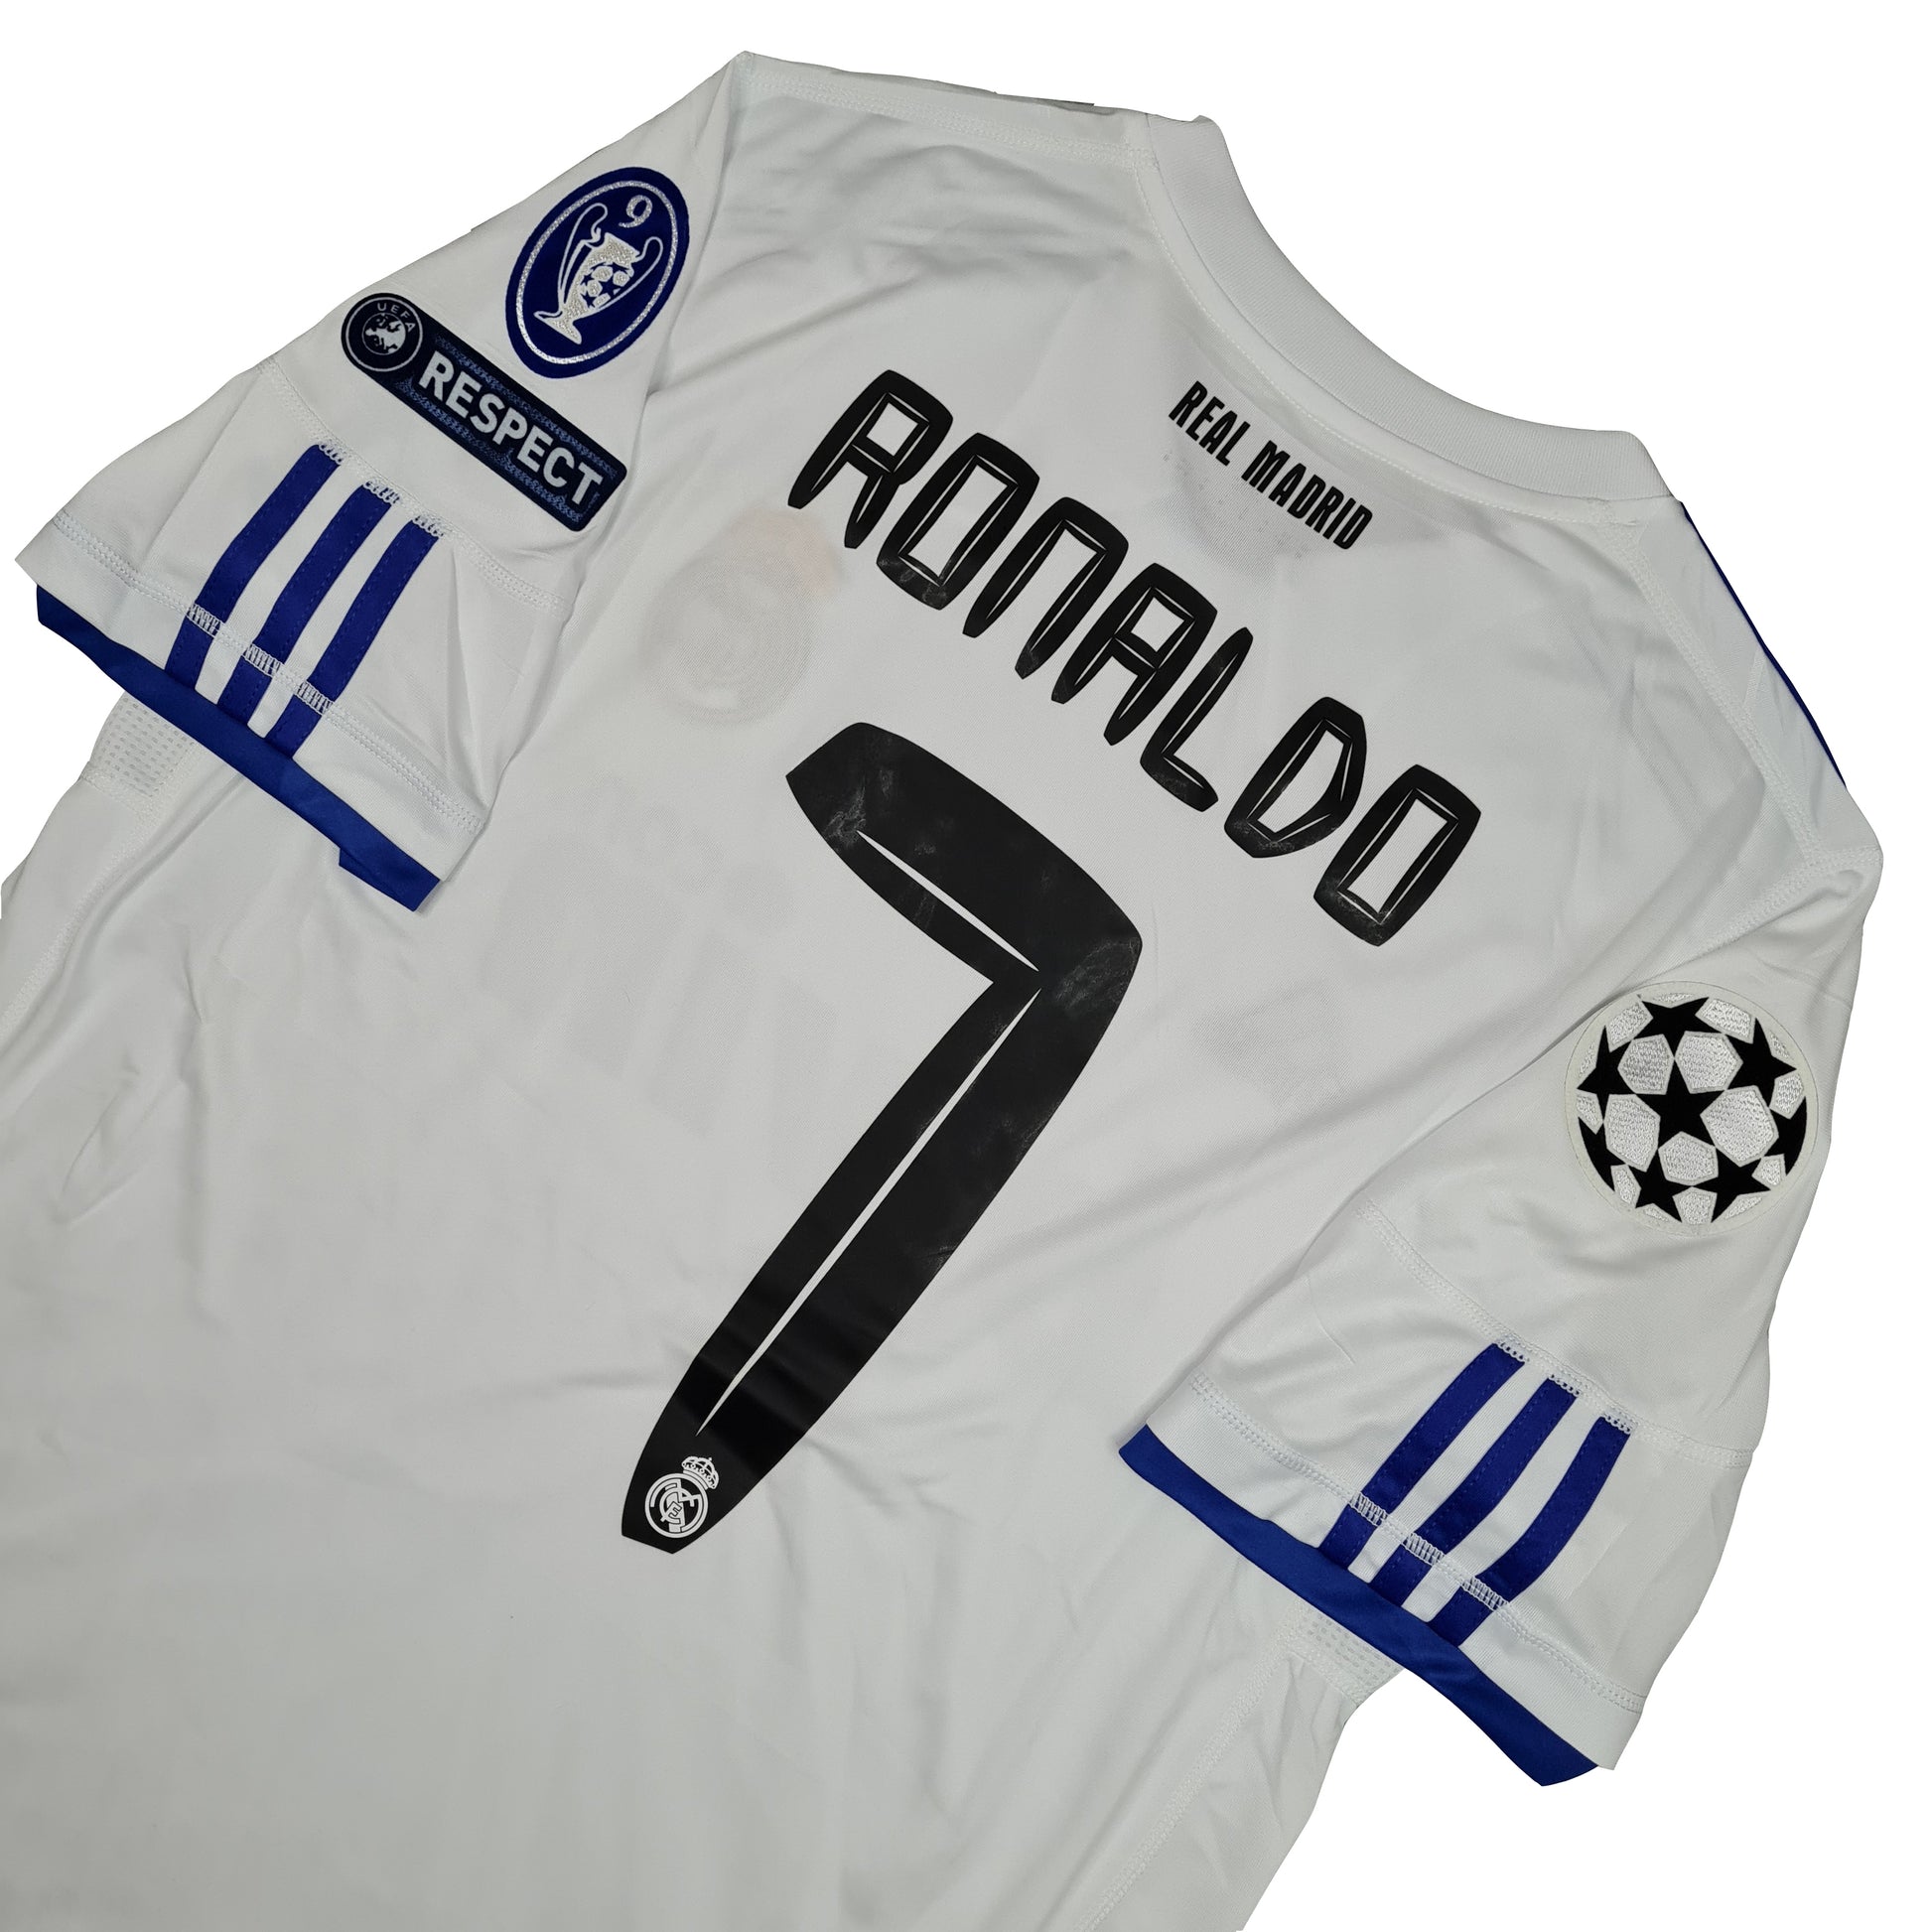 Camiseta Real Madrid 2010-2011 blanca retro Cristiano Ronaldo